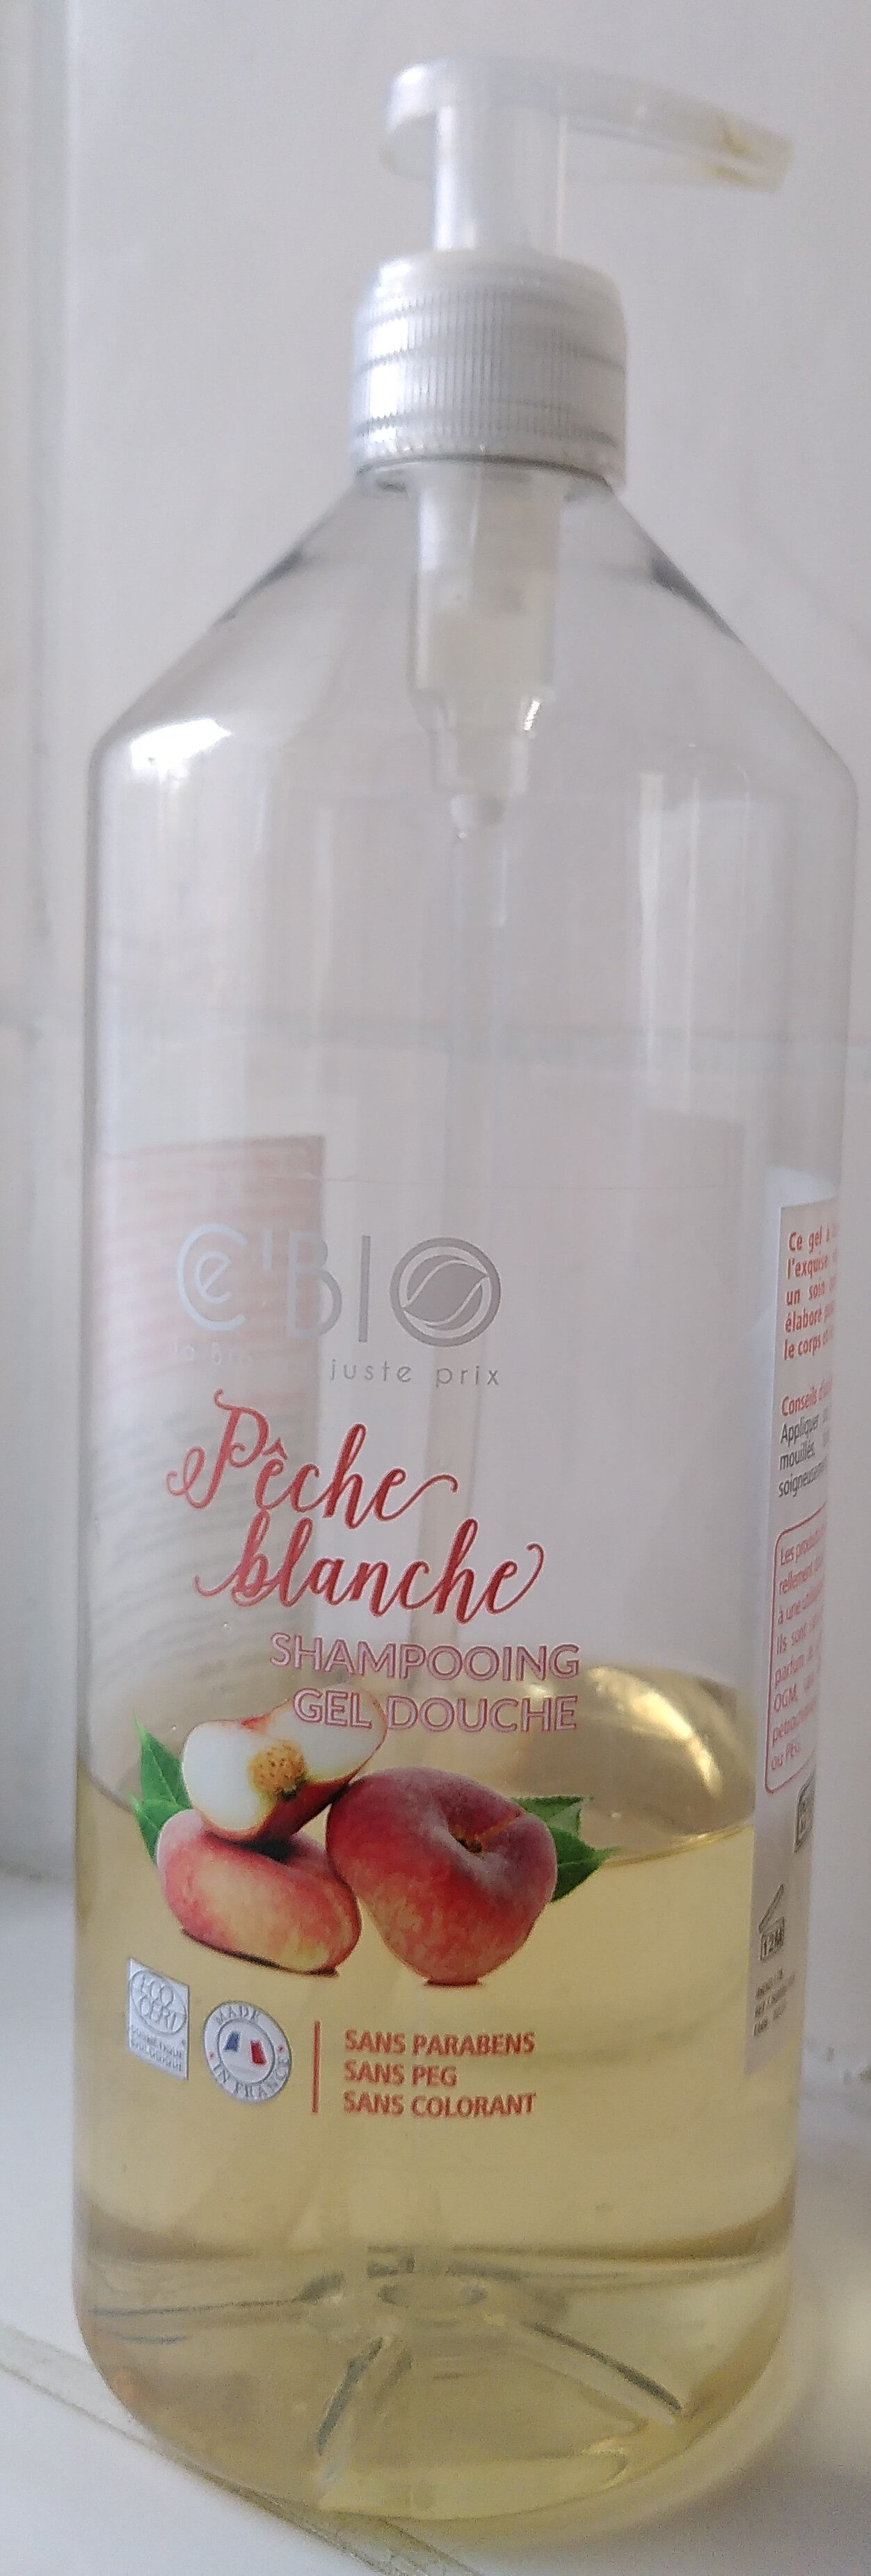 Shampooing gel douche Pêche blanche - Produit - fr